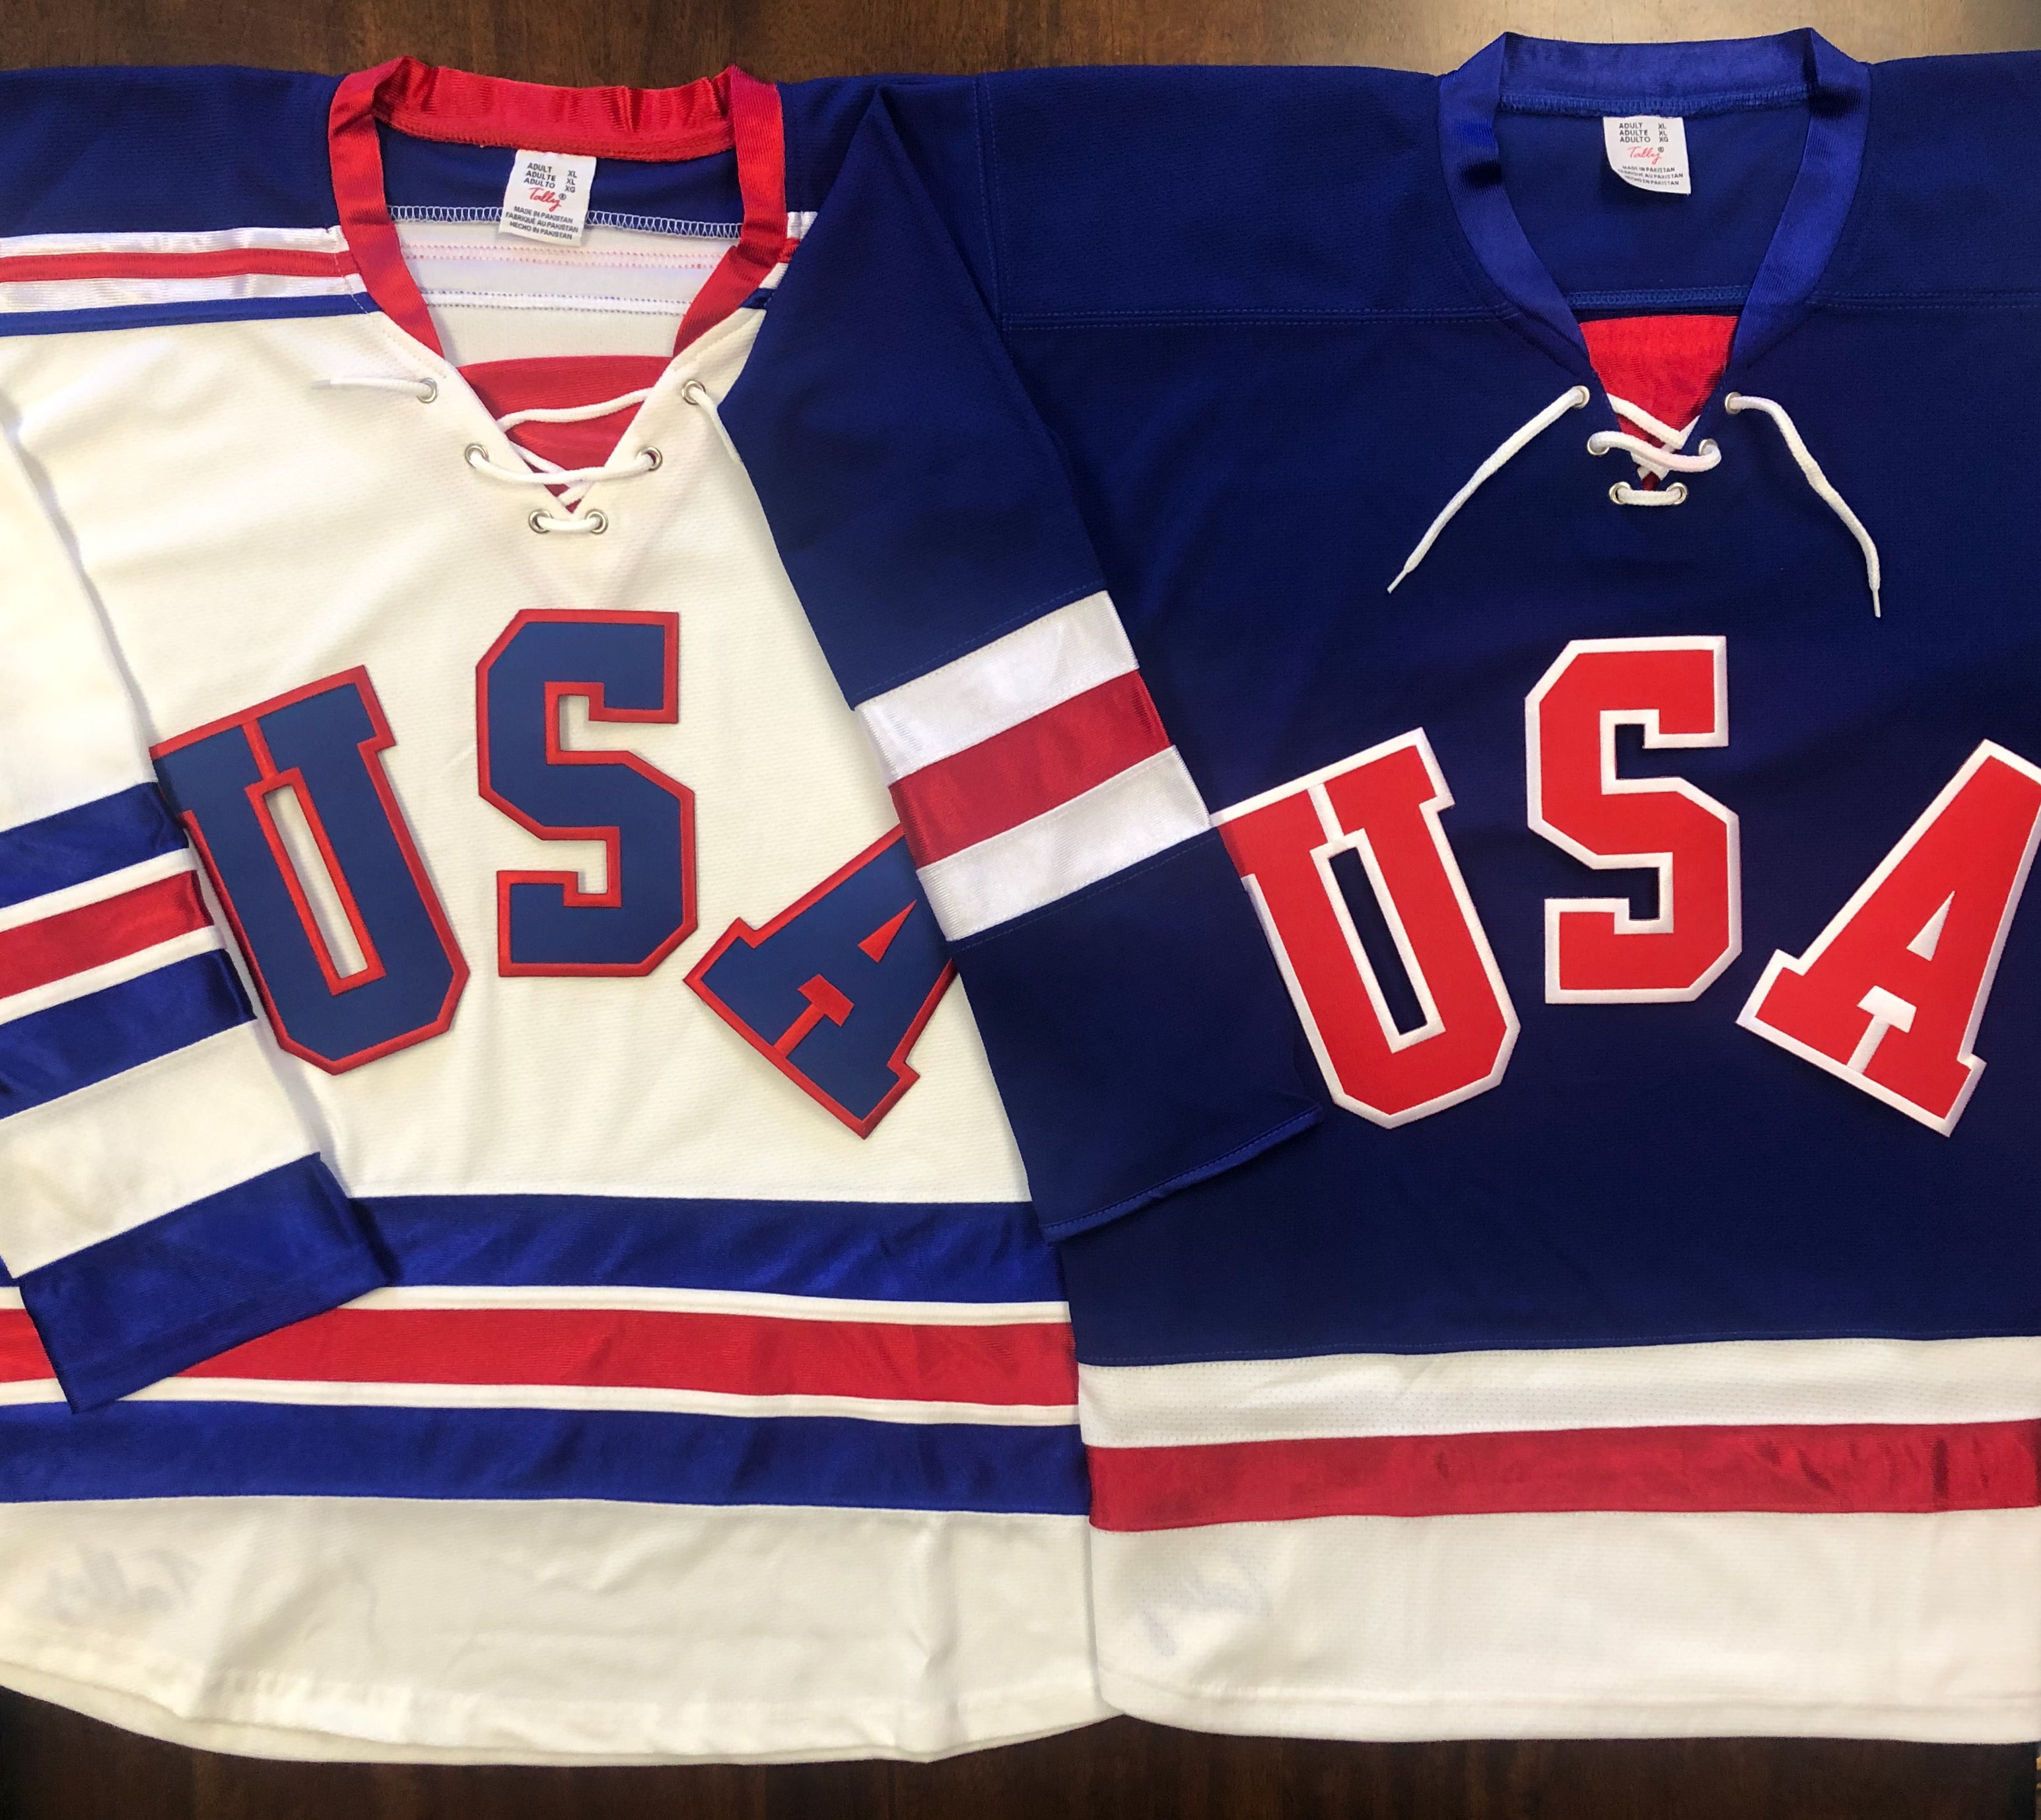 USA - IIHF Official Jersey/Customized